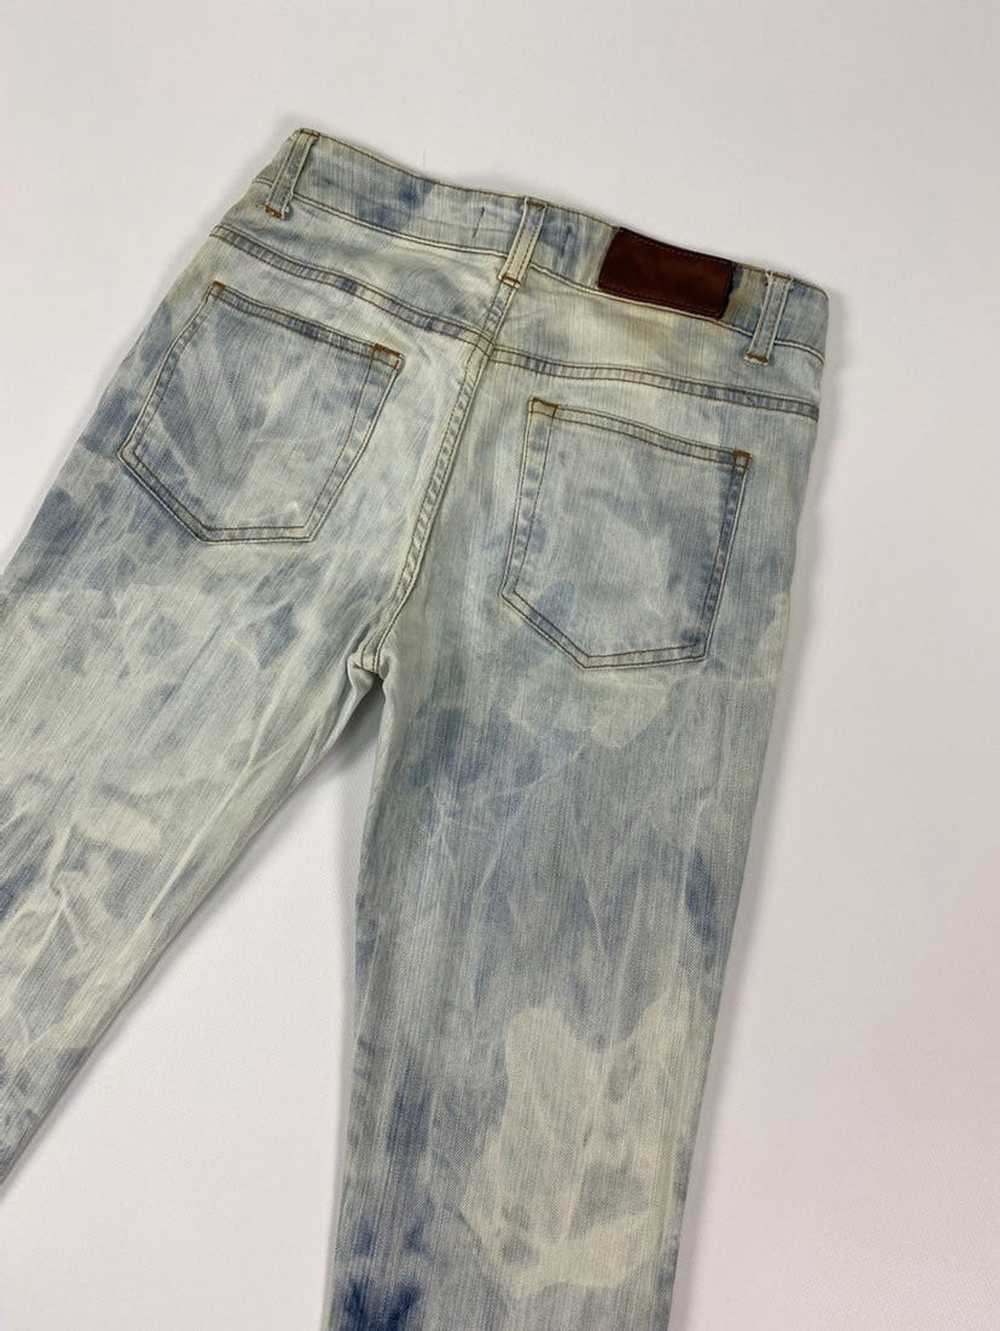 Acne Studios Acne Studios custom jeans (28/32) - image 3